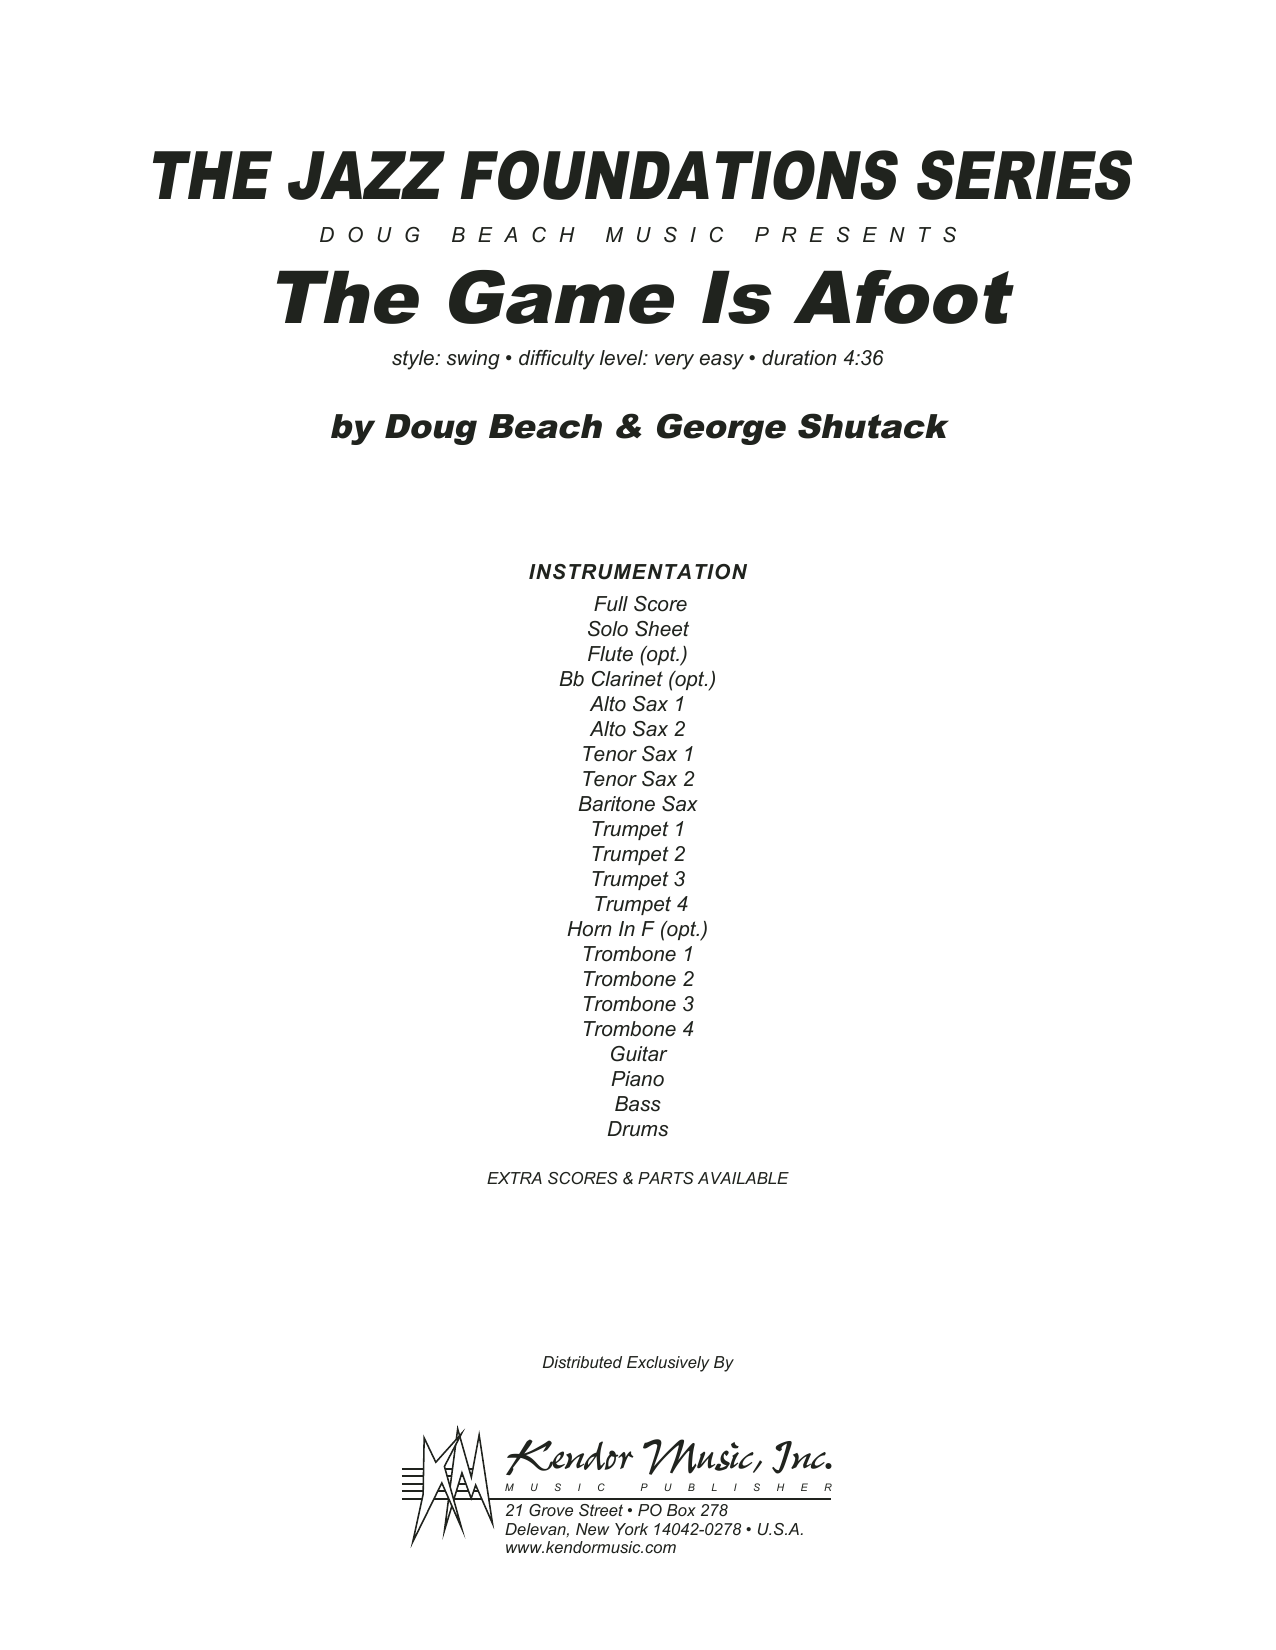 Download Doug Beach & George Shutack The Game Is Afoot - Full Score Sheet Music